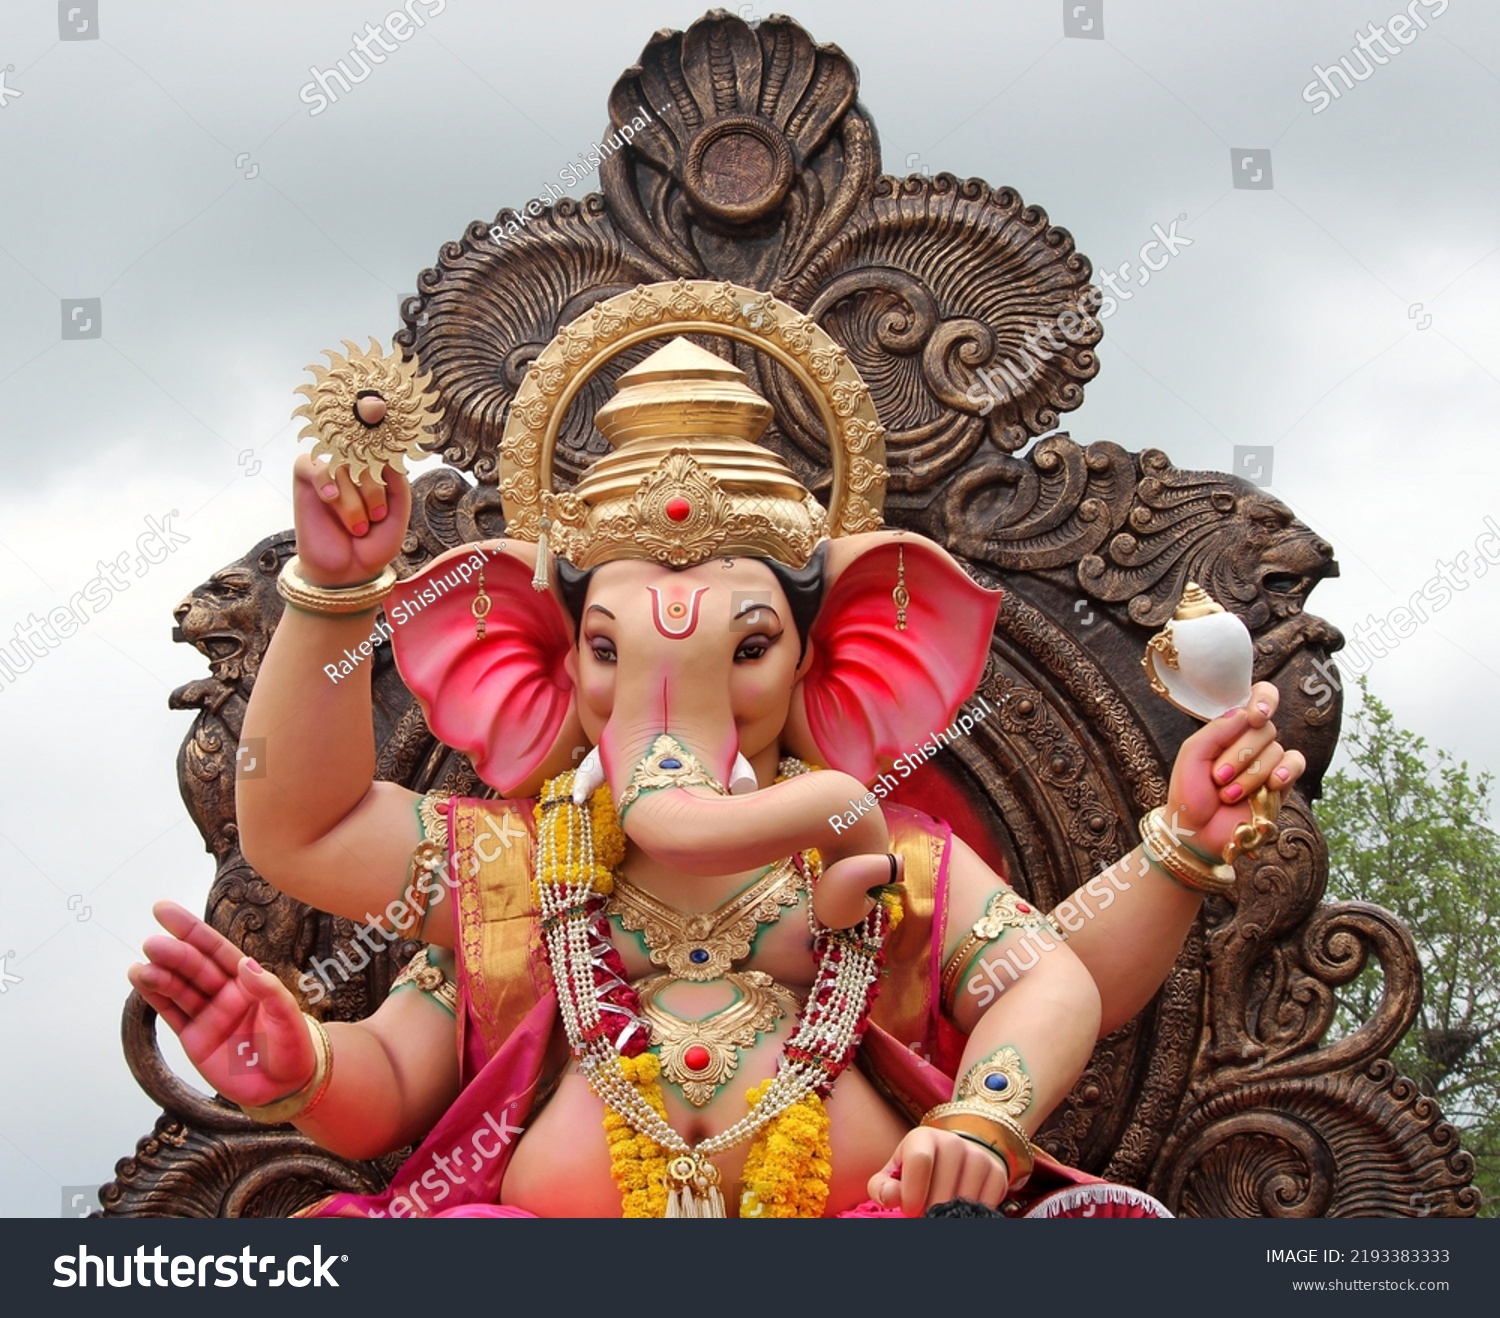 Lord Ganesha Morya Morya Ganesh Mantra Stock Photo 2193383333 ...